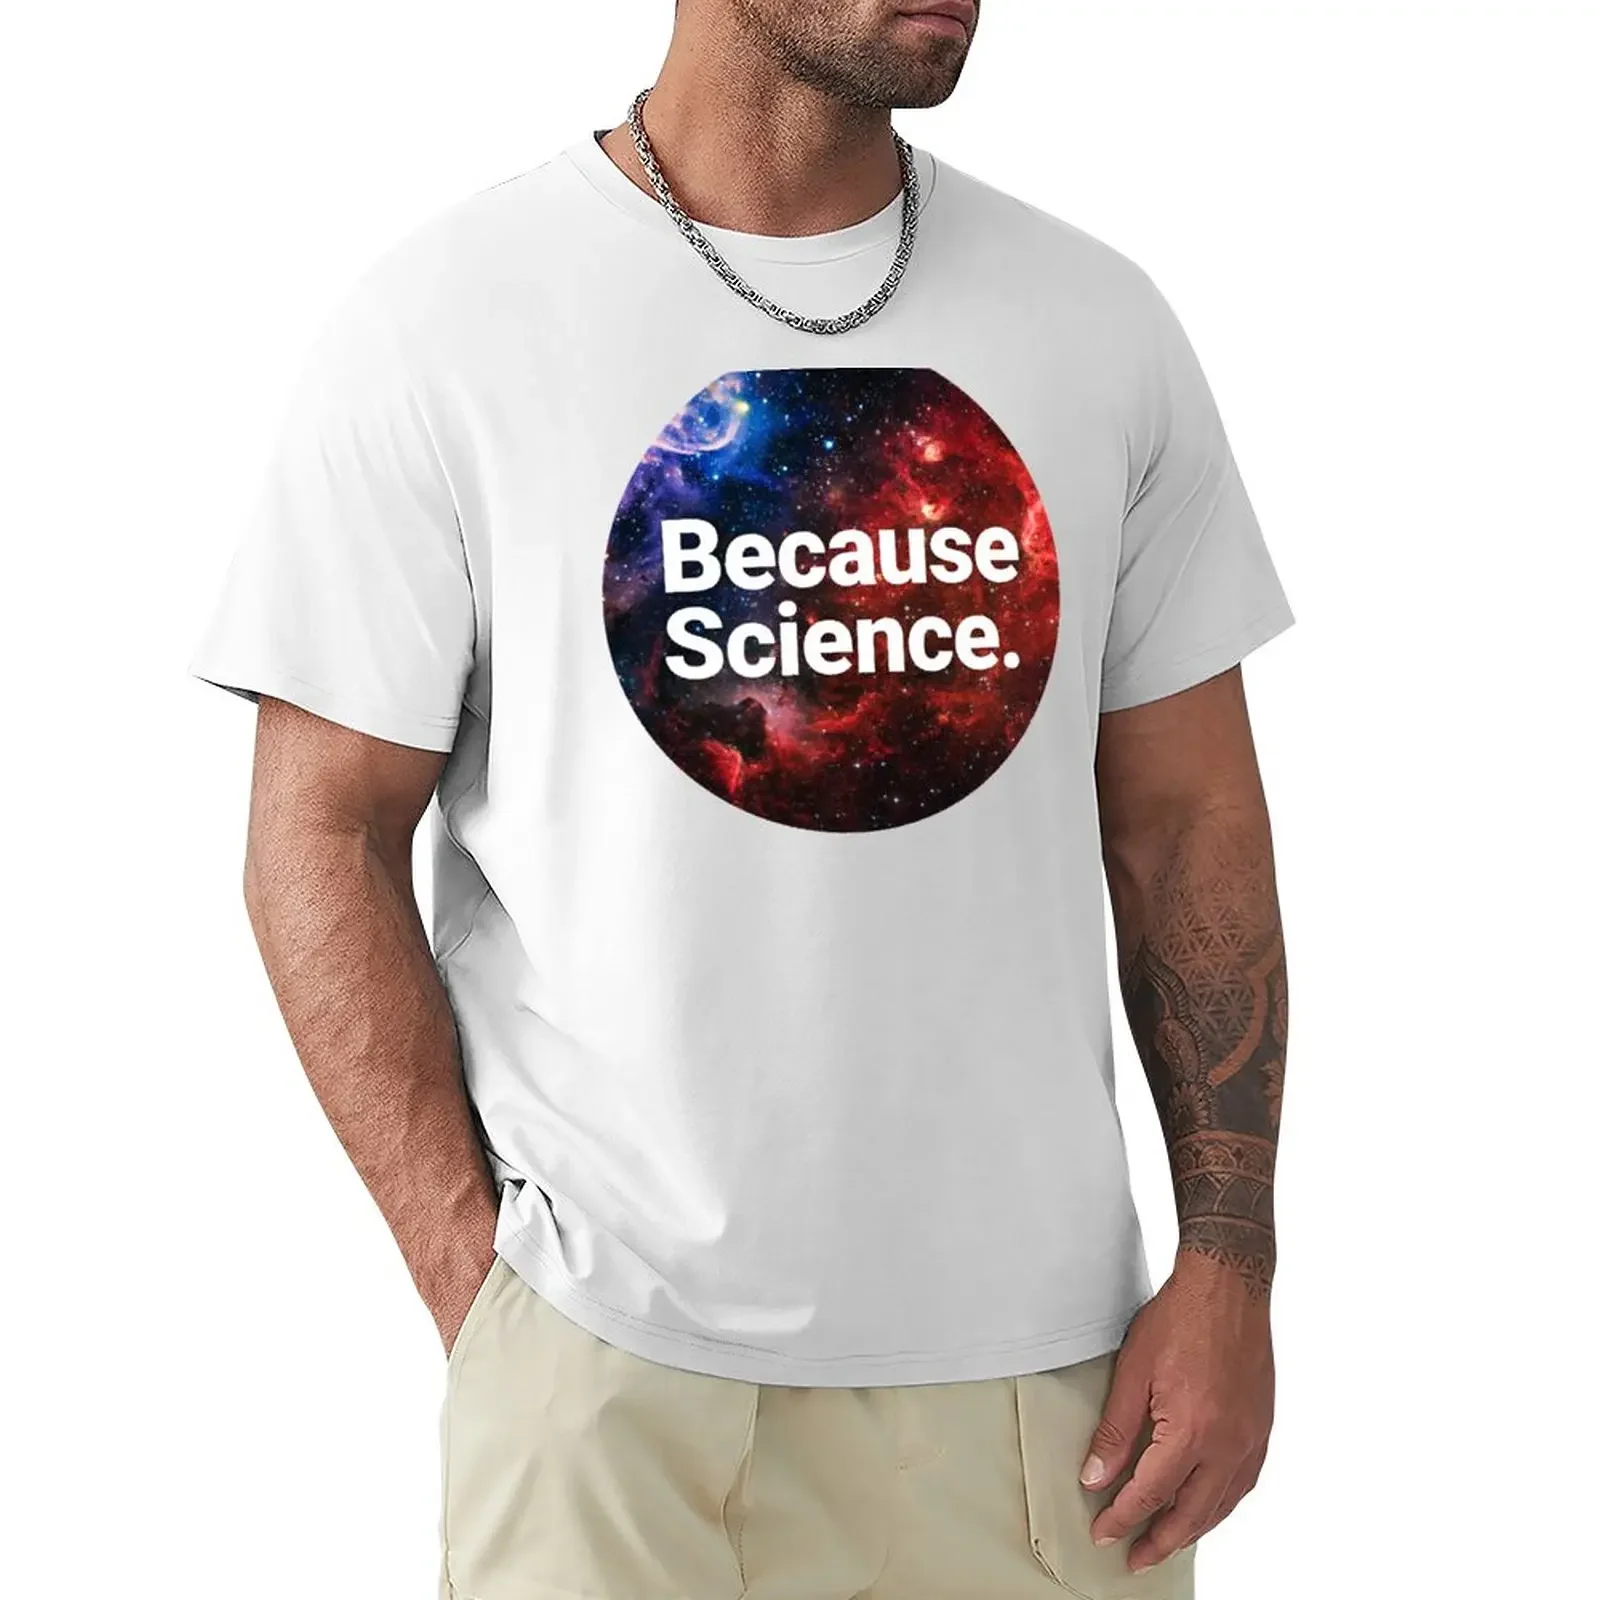 

Because Science. T-Shirt vintage clothes Aesthetic clothing aesthetic clothes fitted t shirts for men